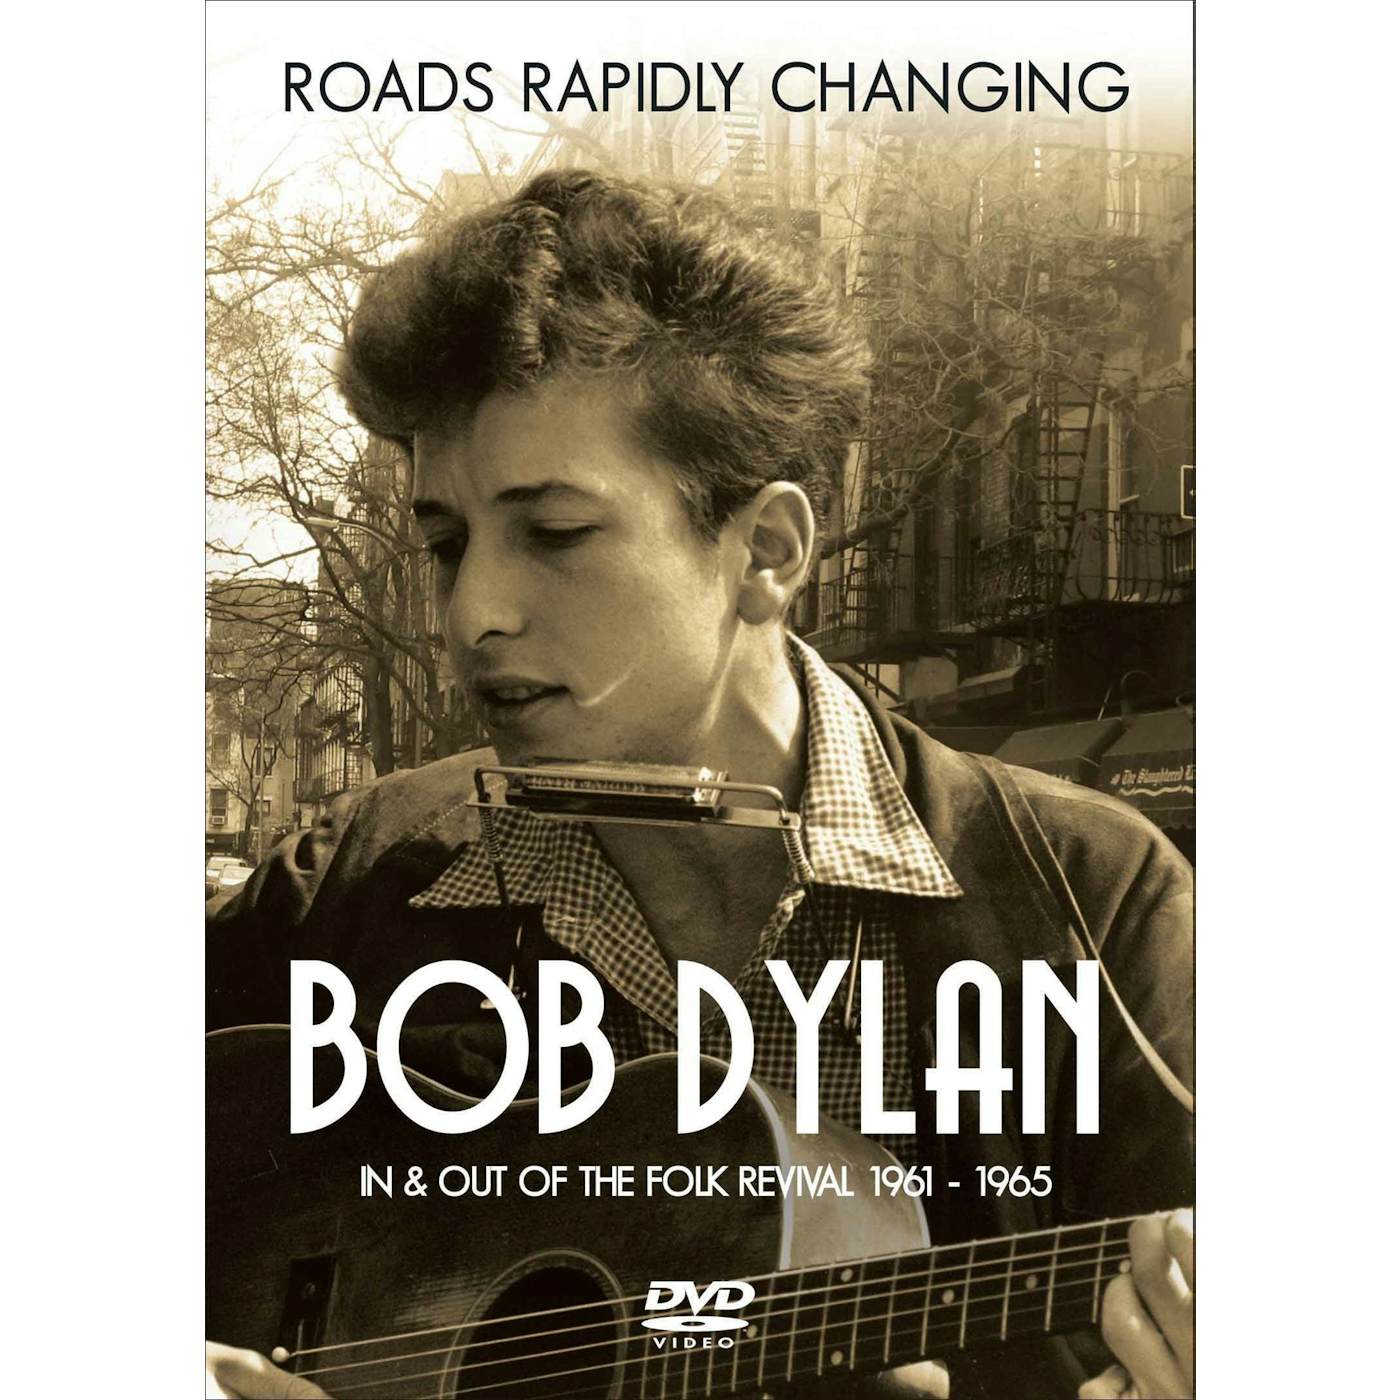 Bob Dylan DVD - Roads Rapidly Changing